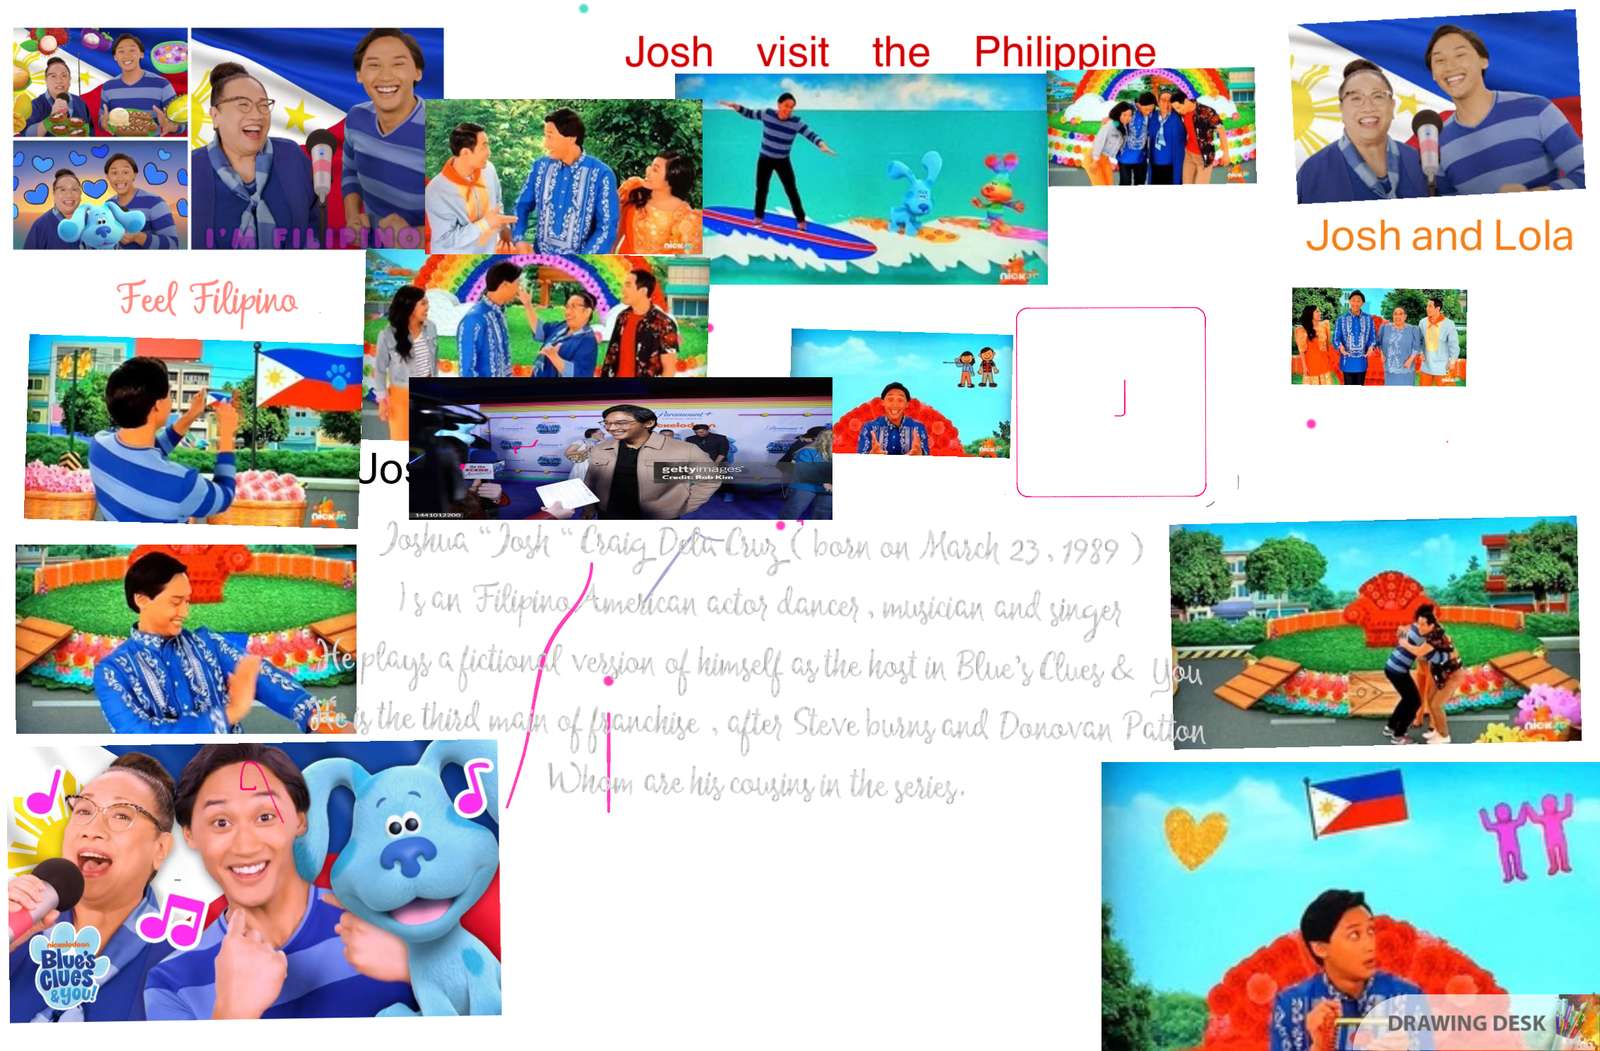 Joshua “Josh” Craig Dela Cruz puzzle online